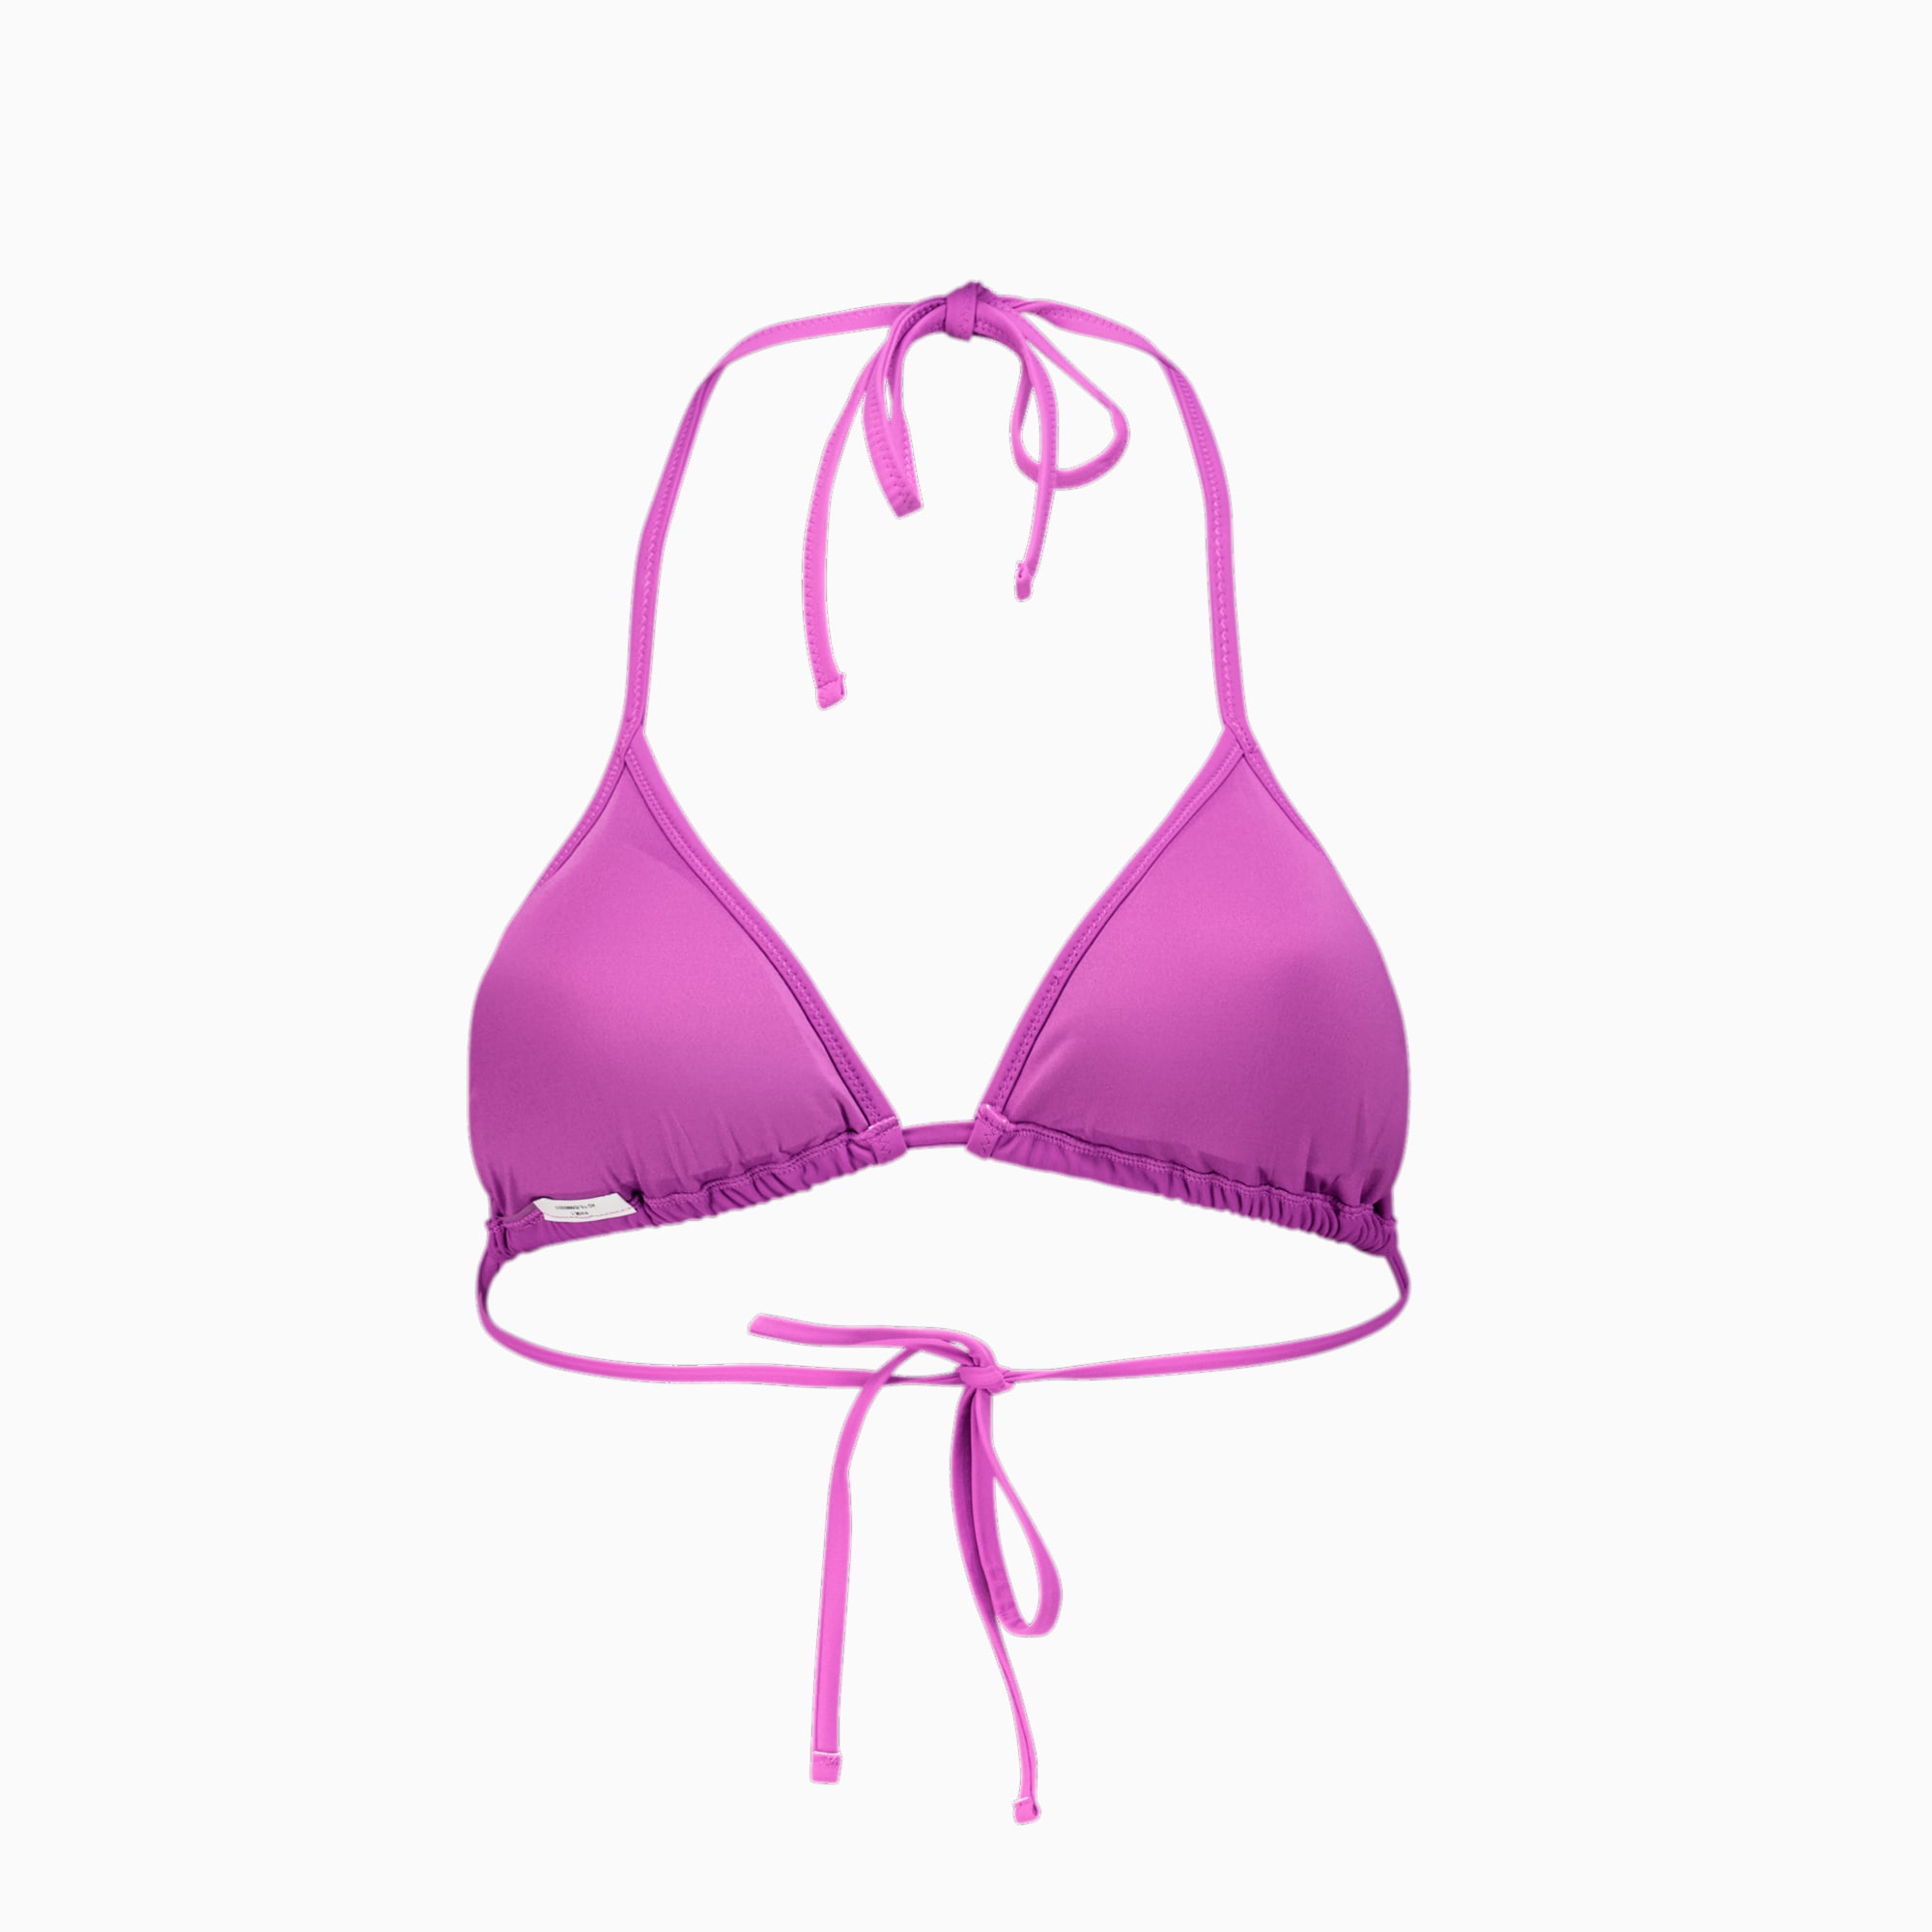 PUMA Swim Triangle Bikinitopje voor Dames, Paars